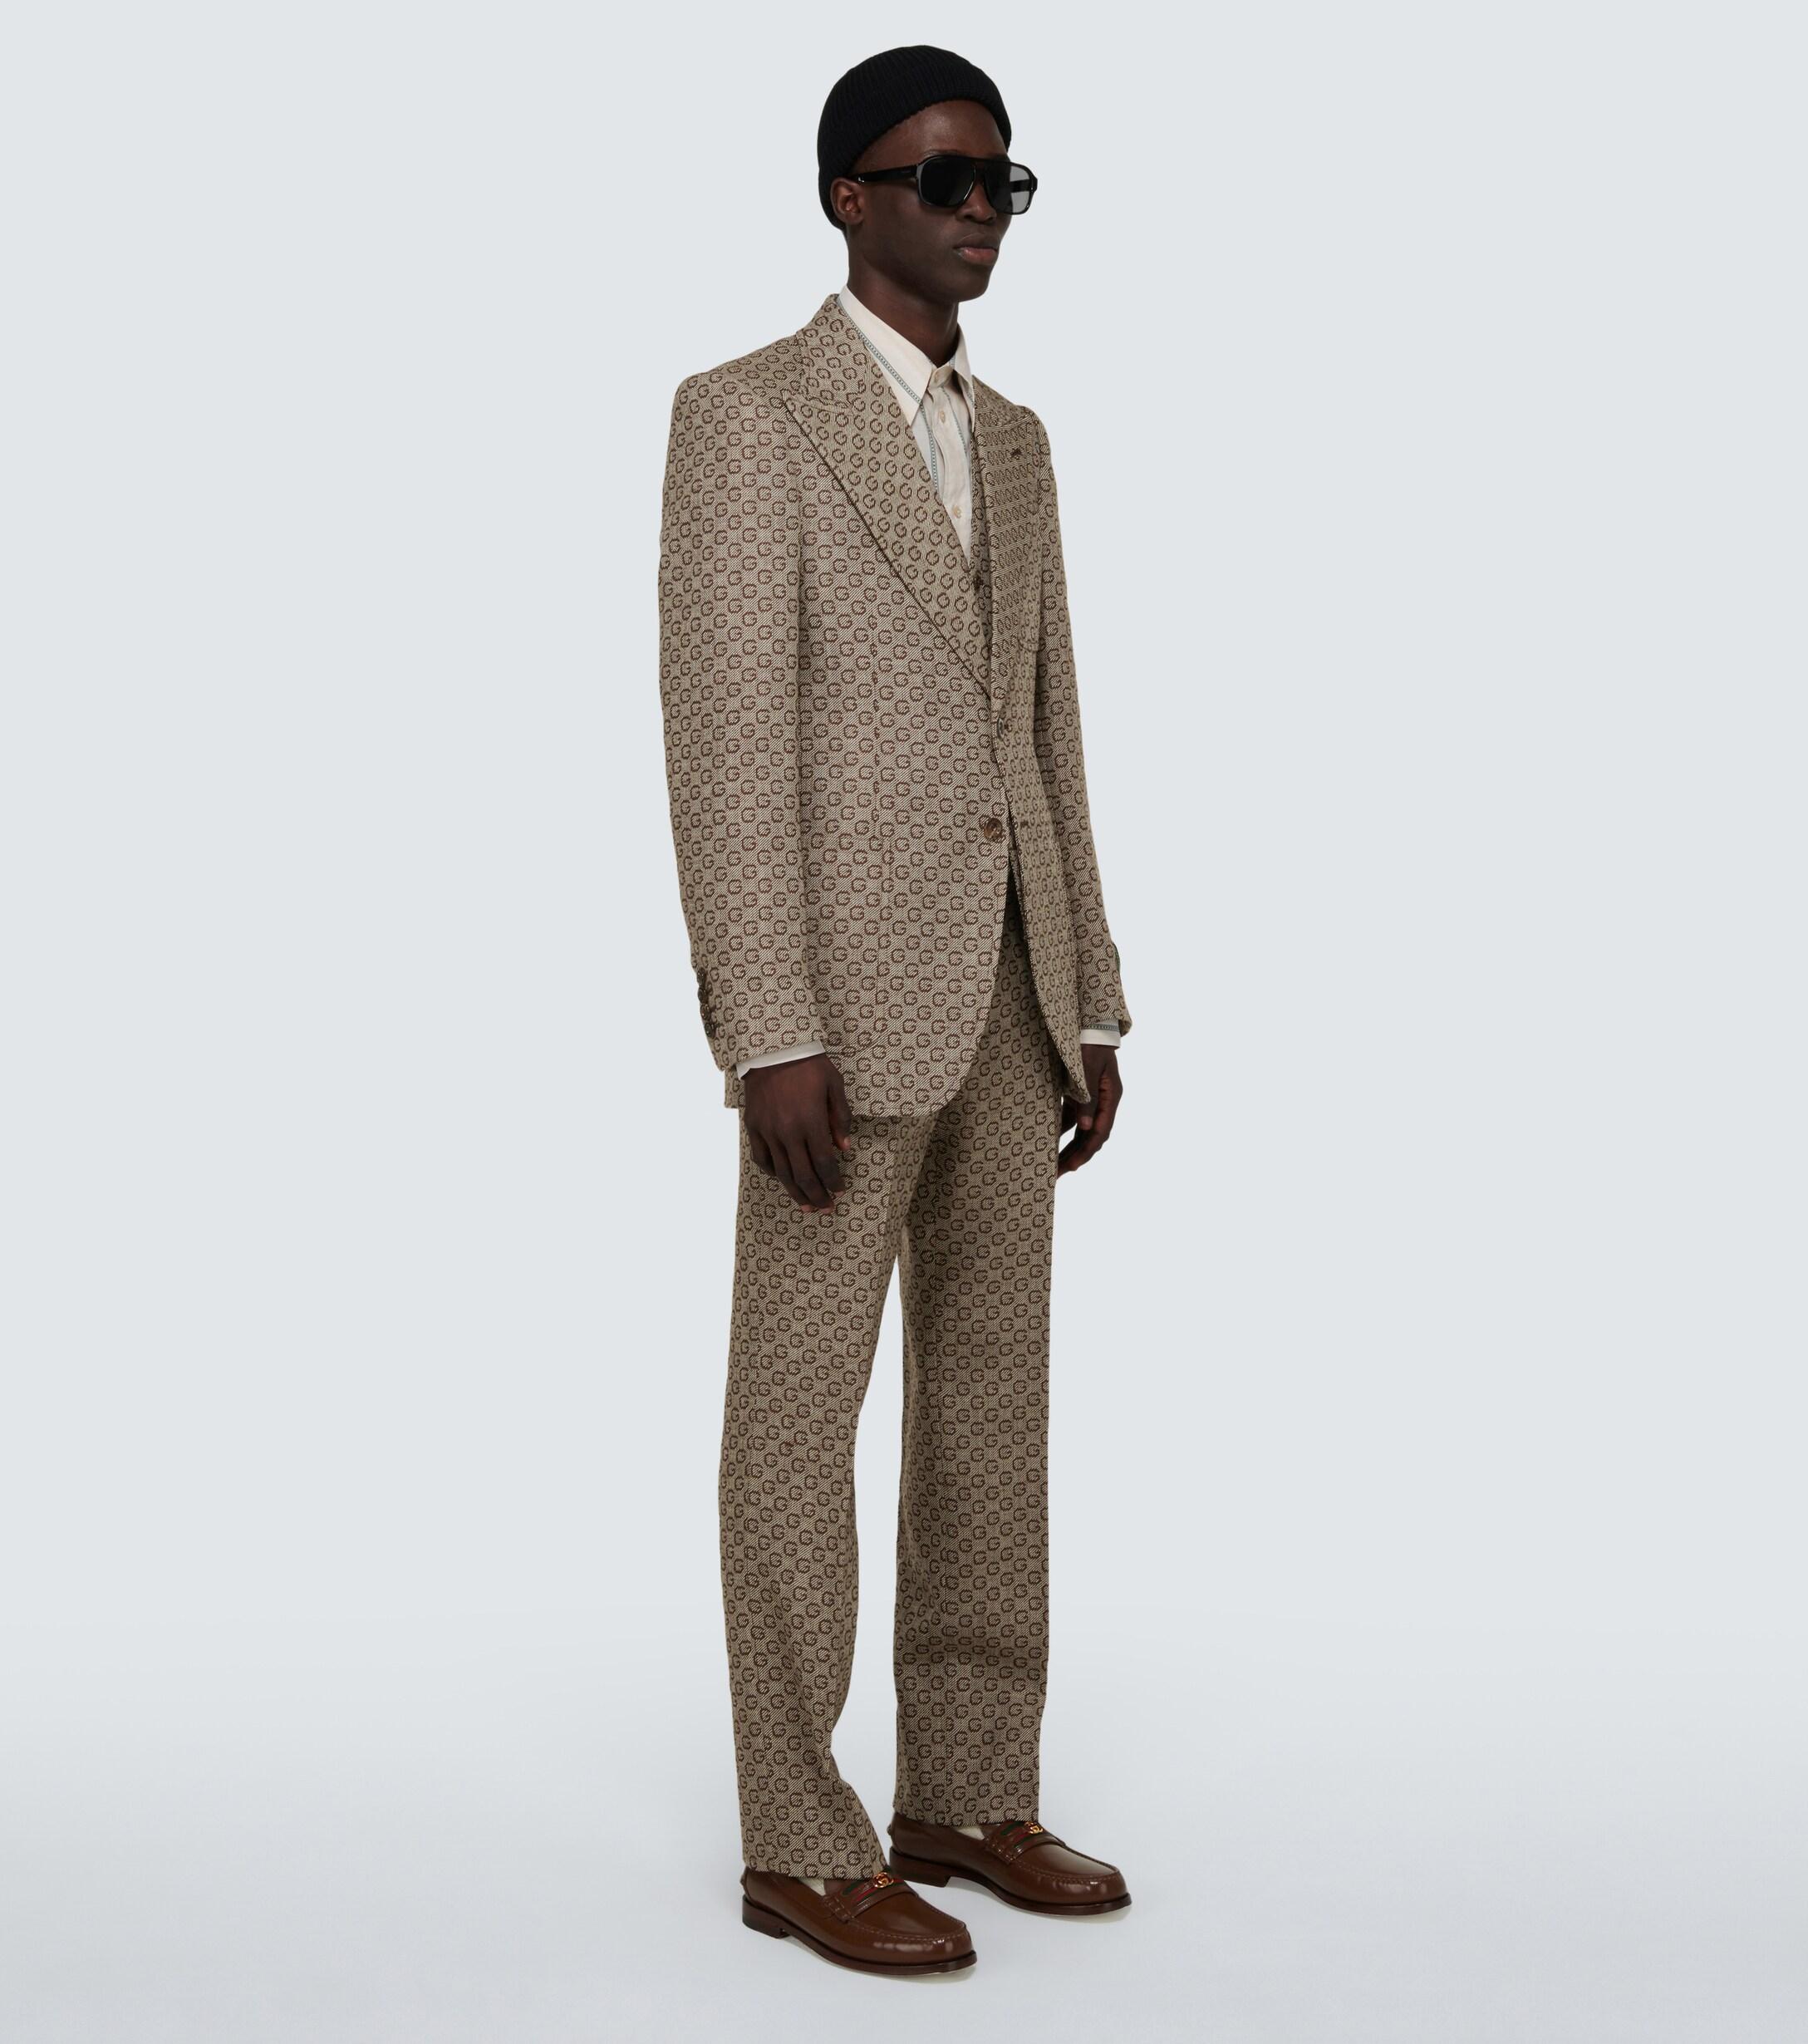 Gucci Monogrammed Wool Blazer in Brown for Men - Lyst